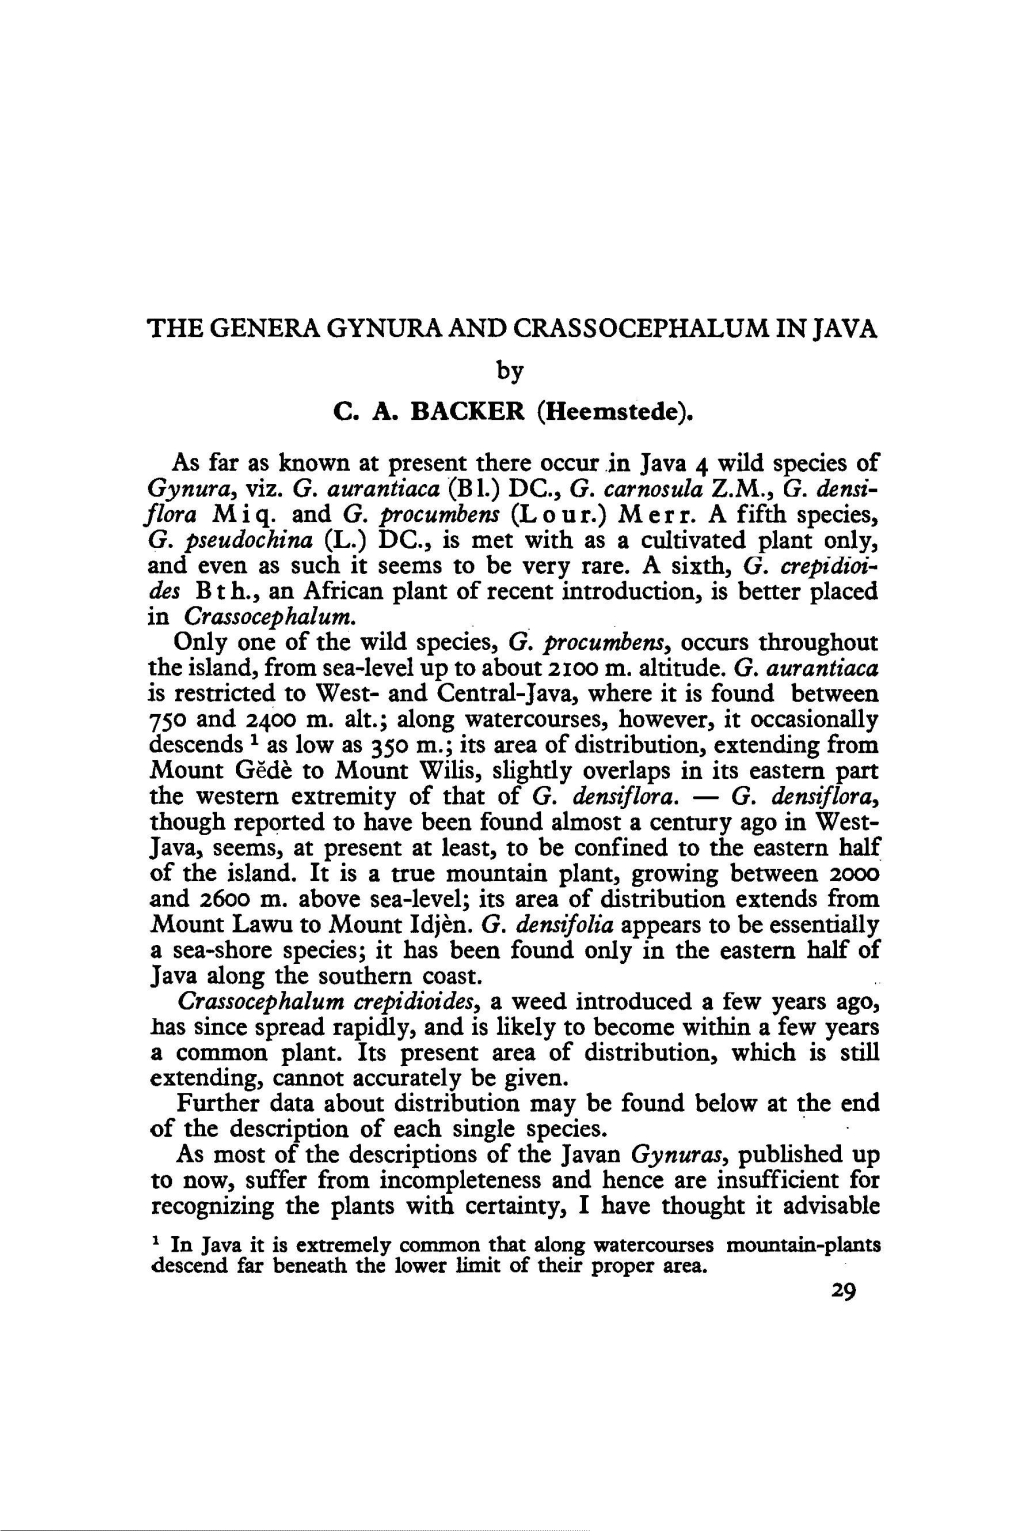 The Genera Gynura and Crassocephalum in Java